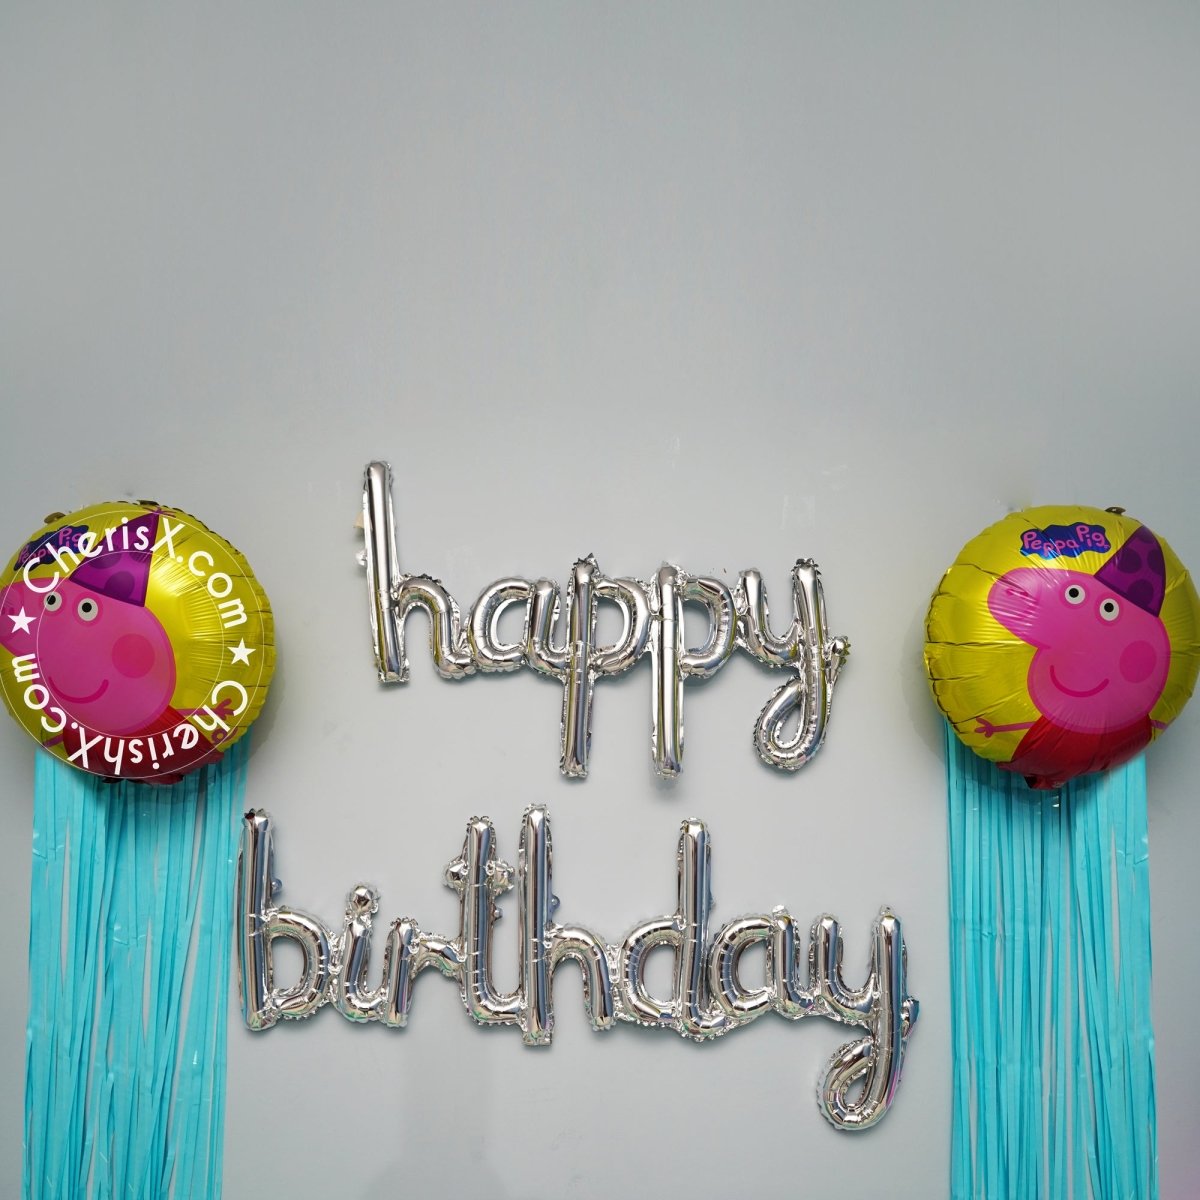 Peppa Pig Theme Kids Birthday Decoration Items - 44 Pcs Combo - DIY Kit freeshipping - CherishX Partystore